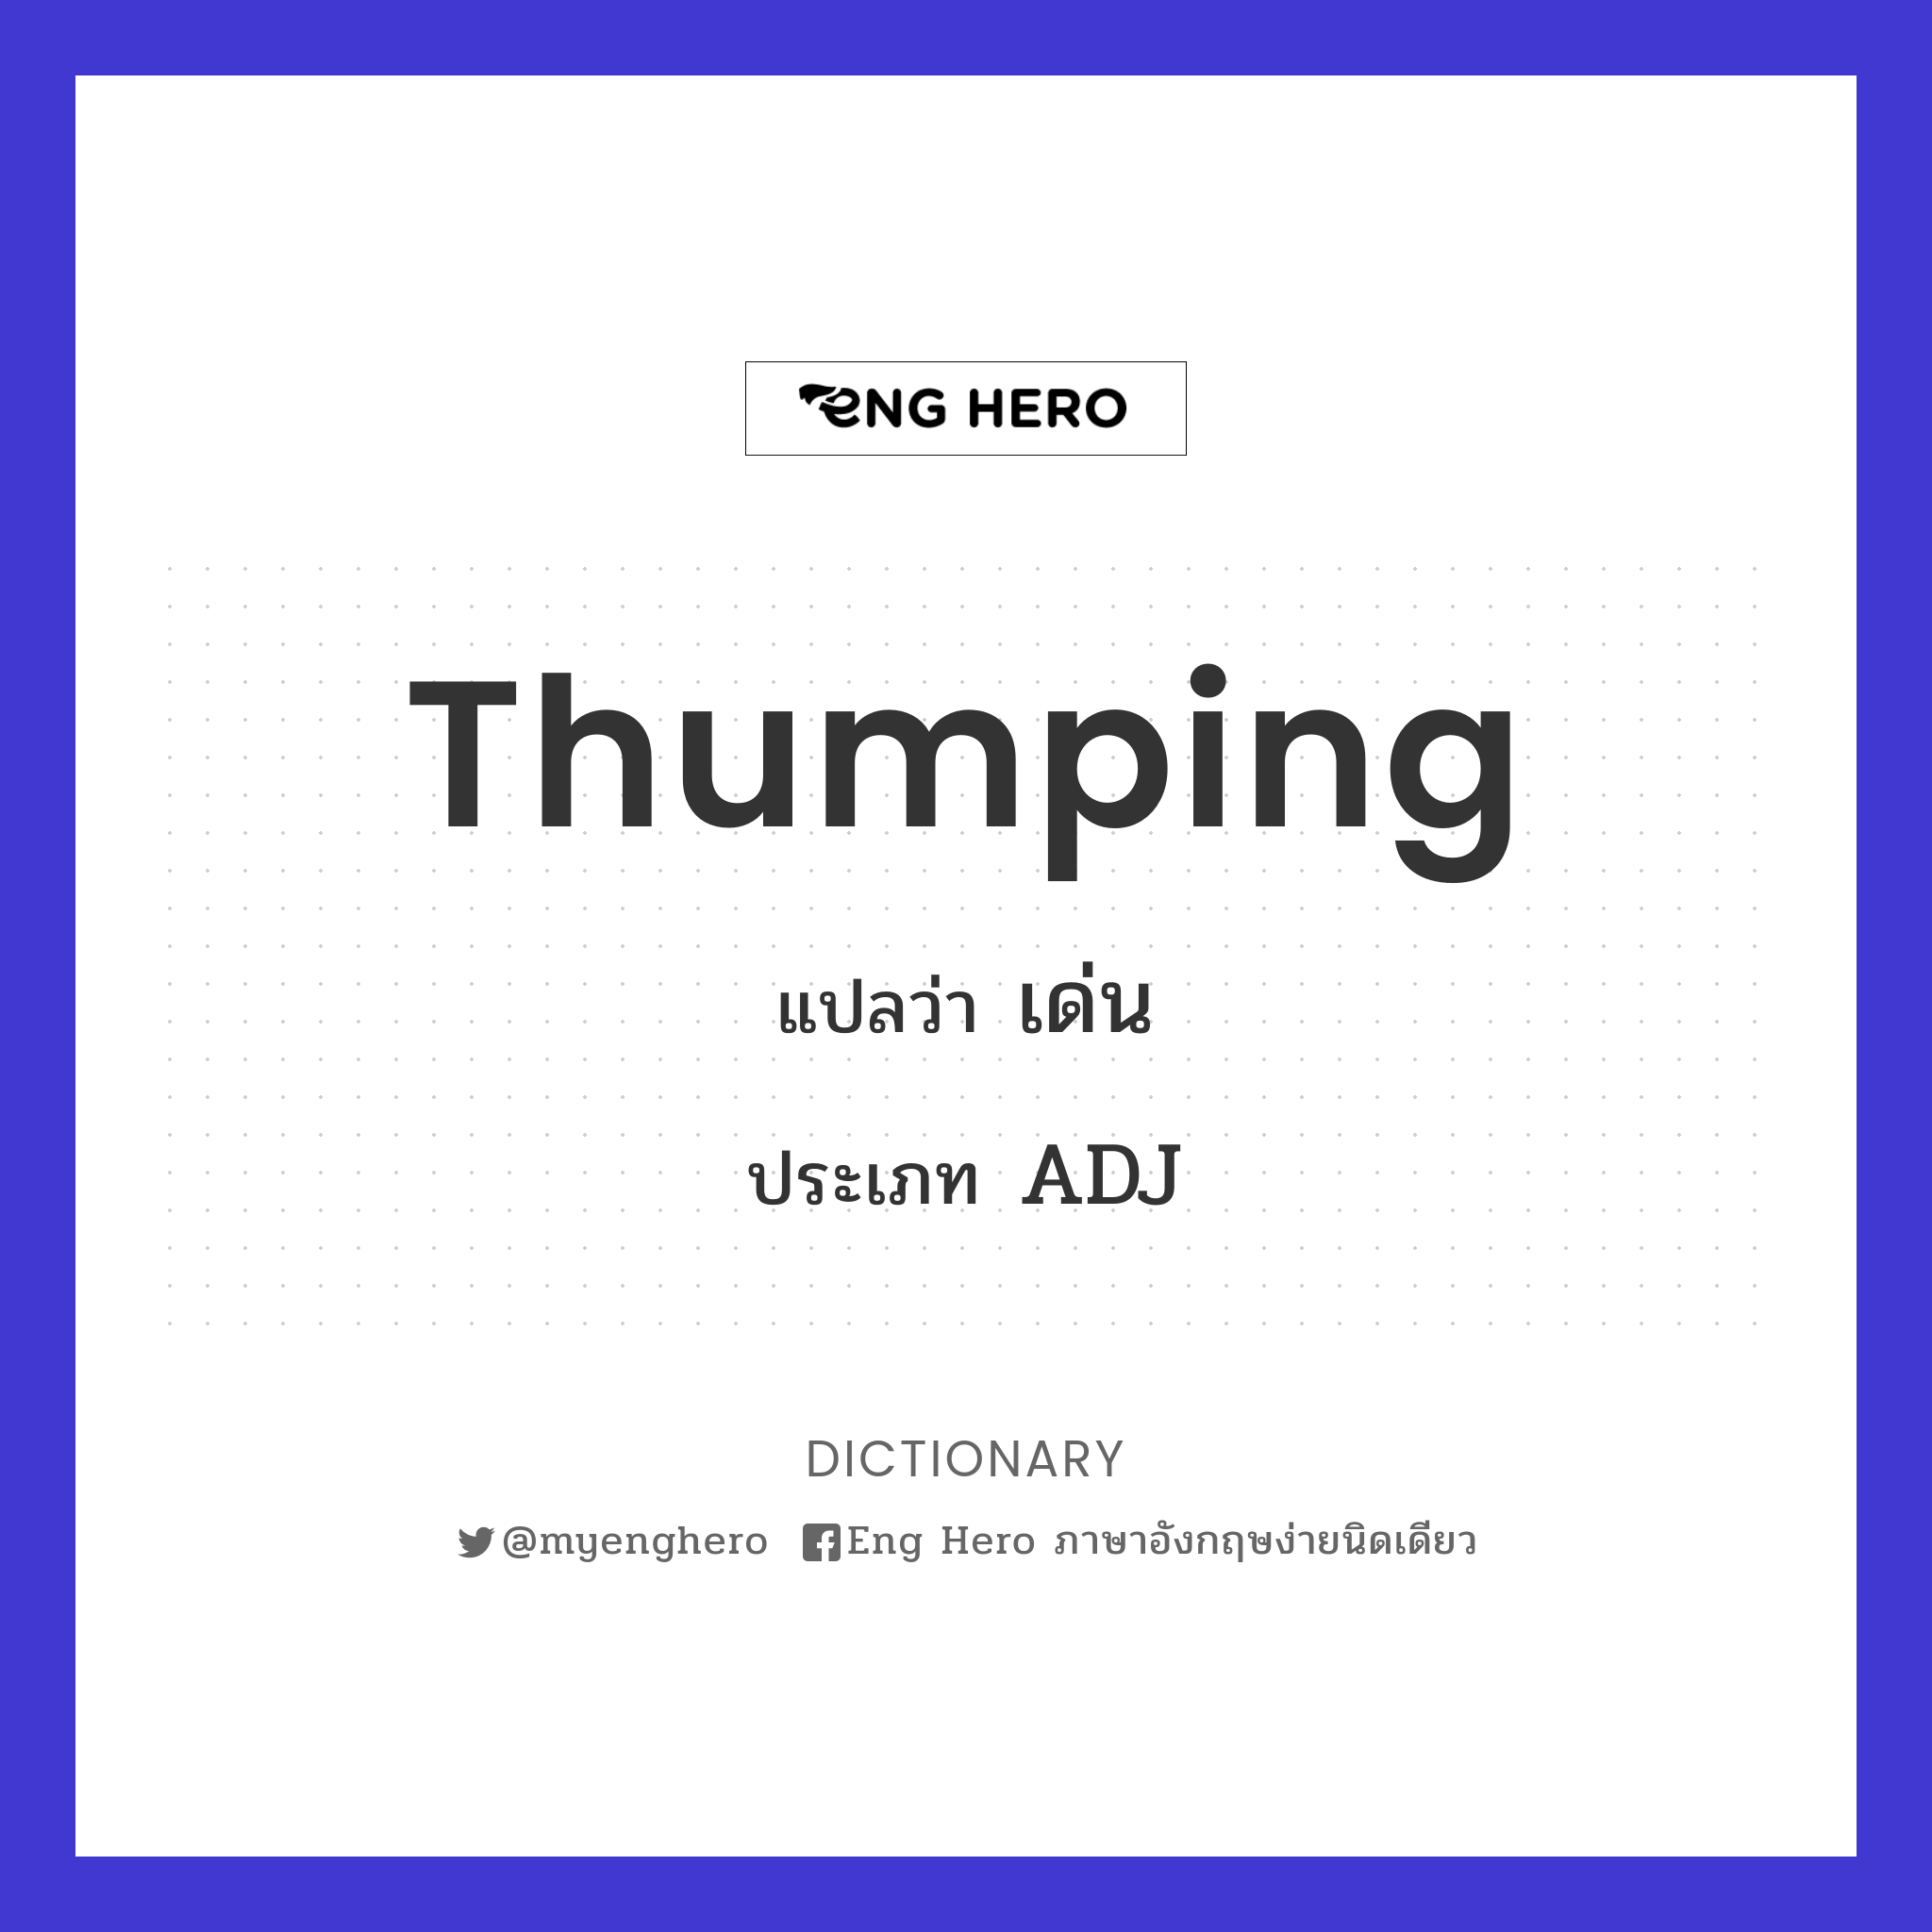 thumping